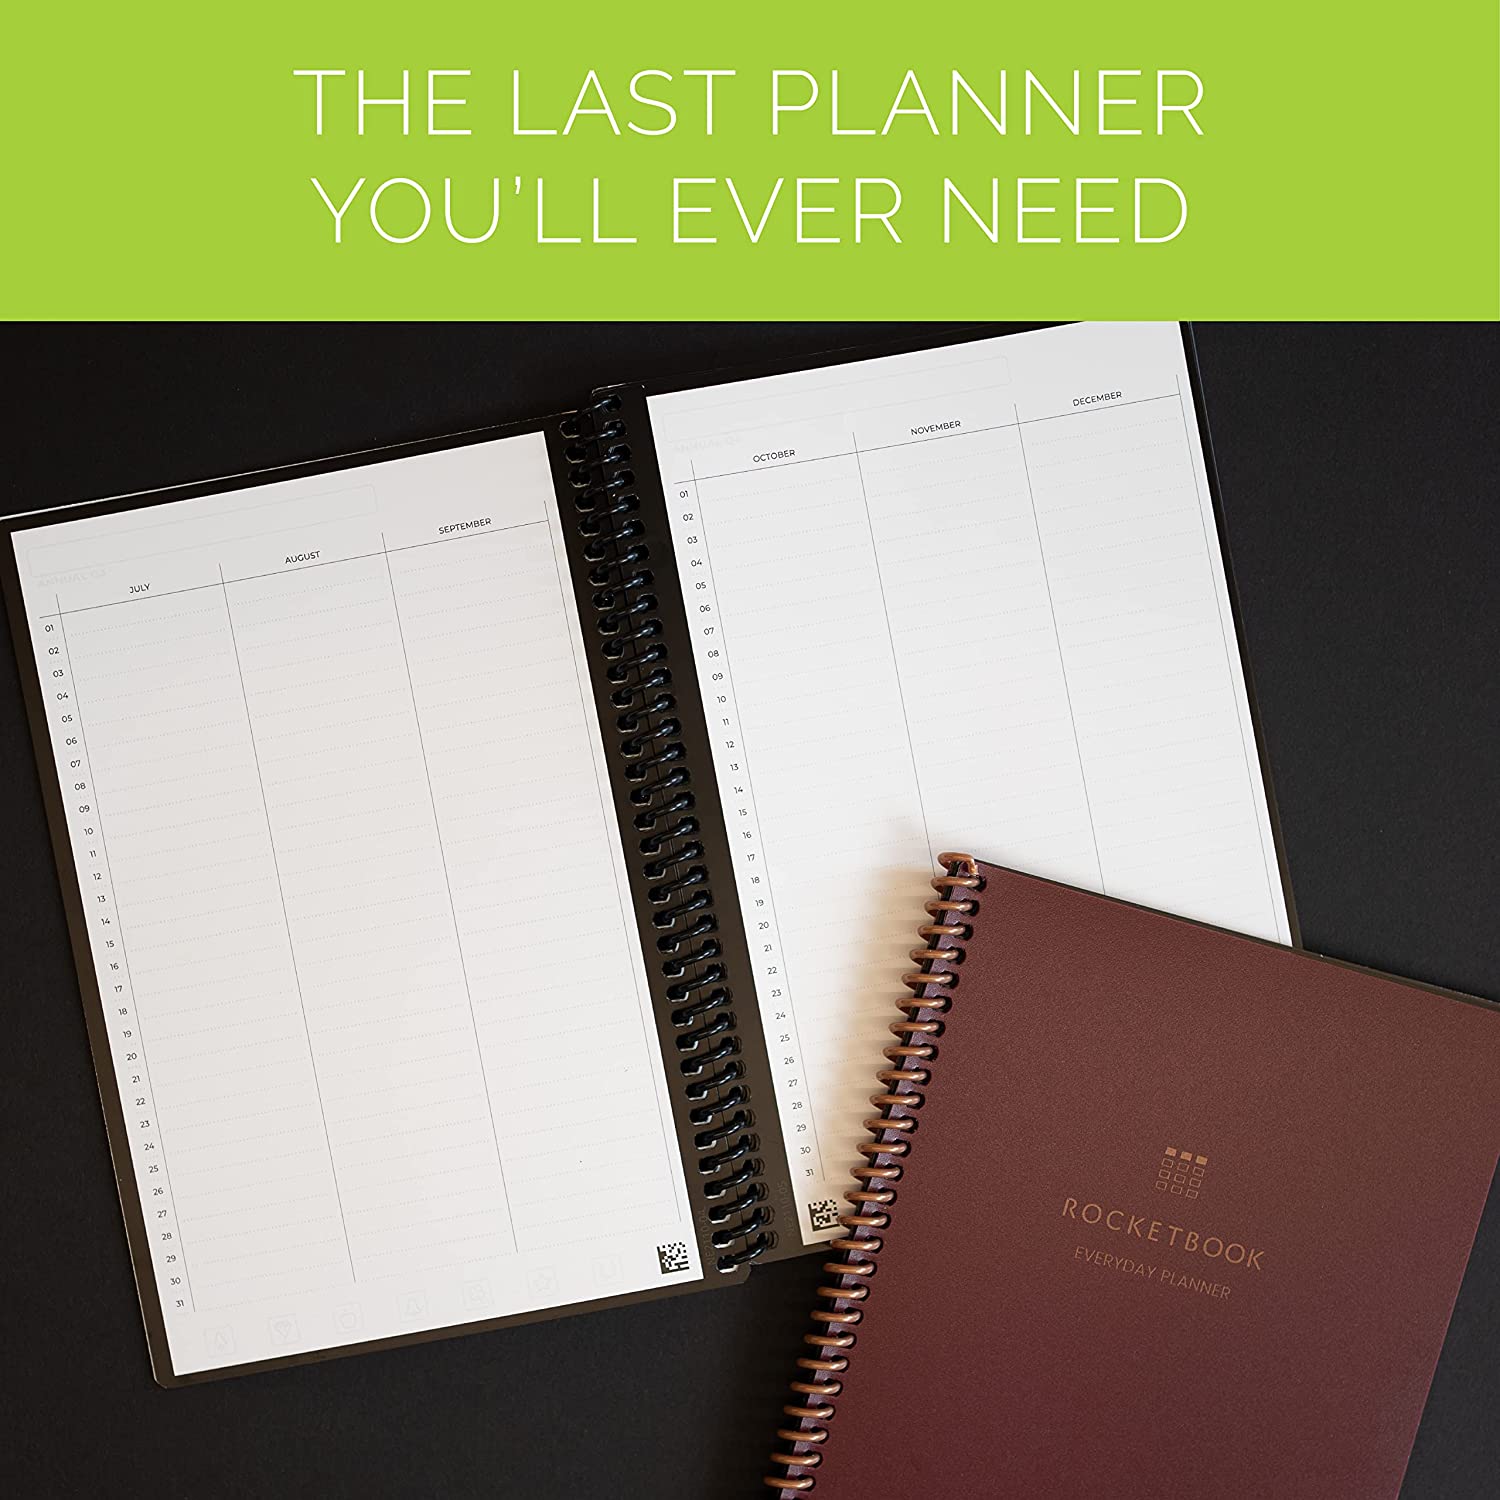 Rocketbook Everyday Planner